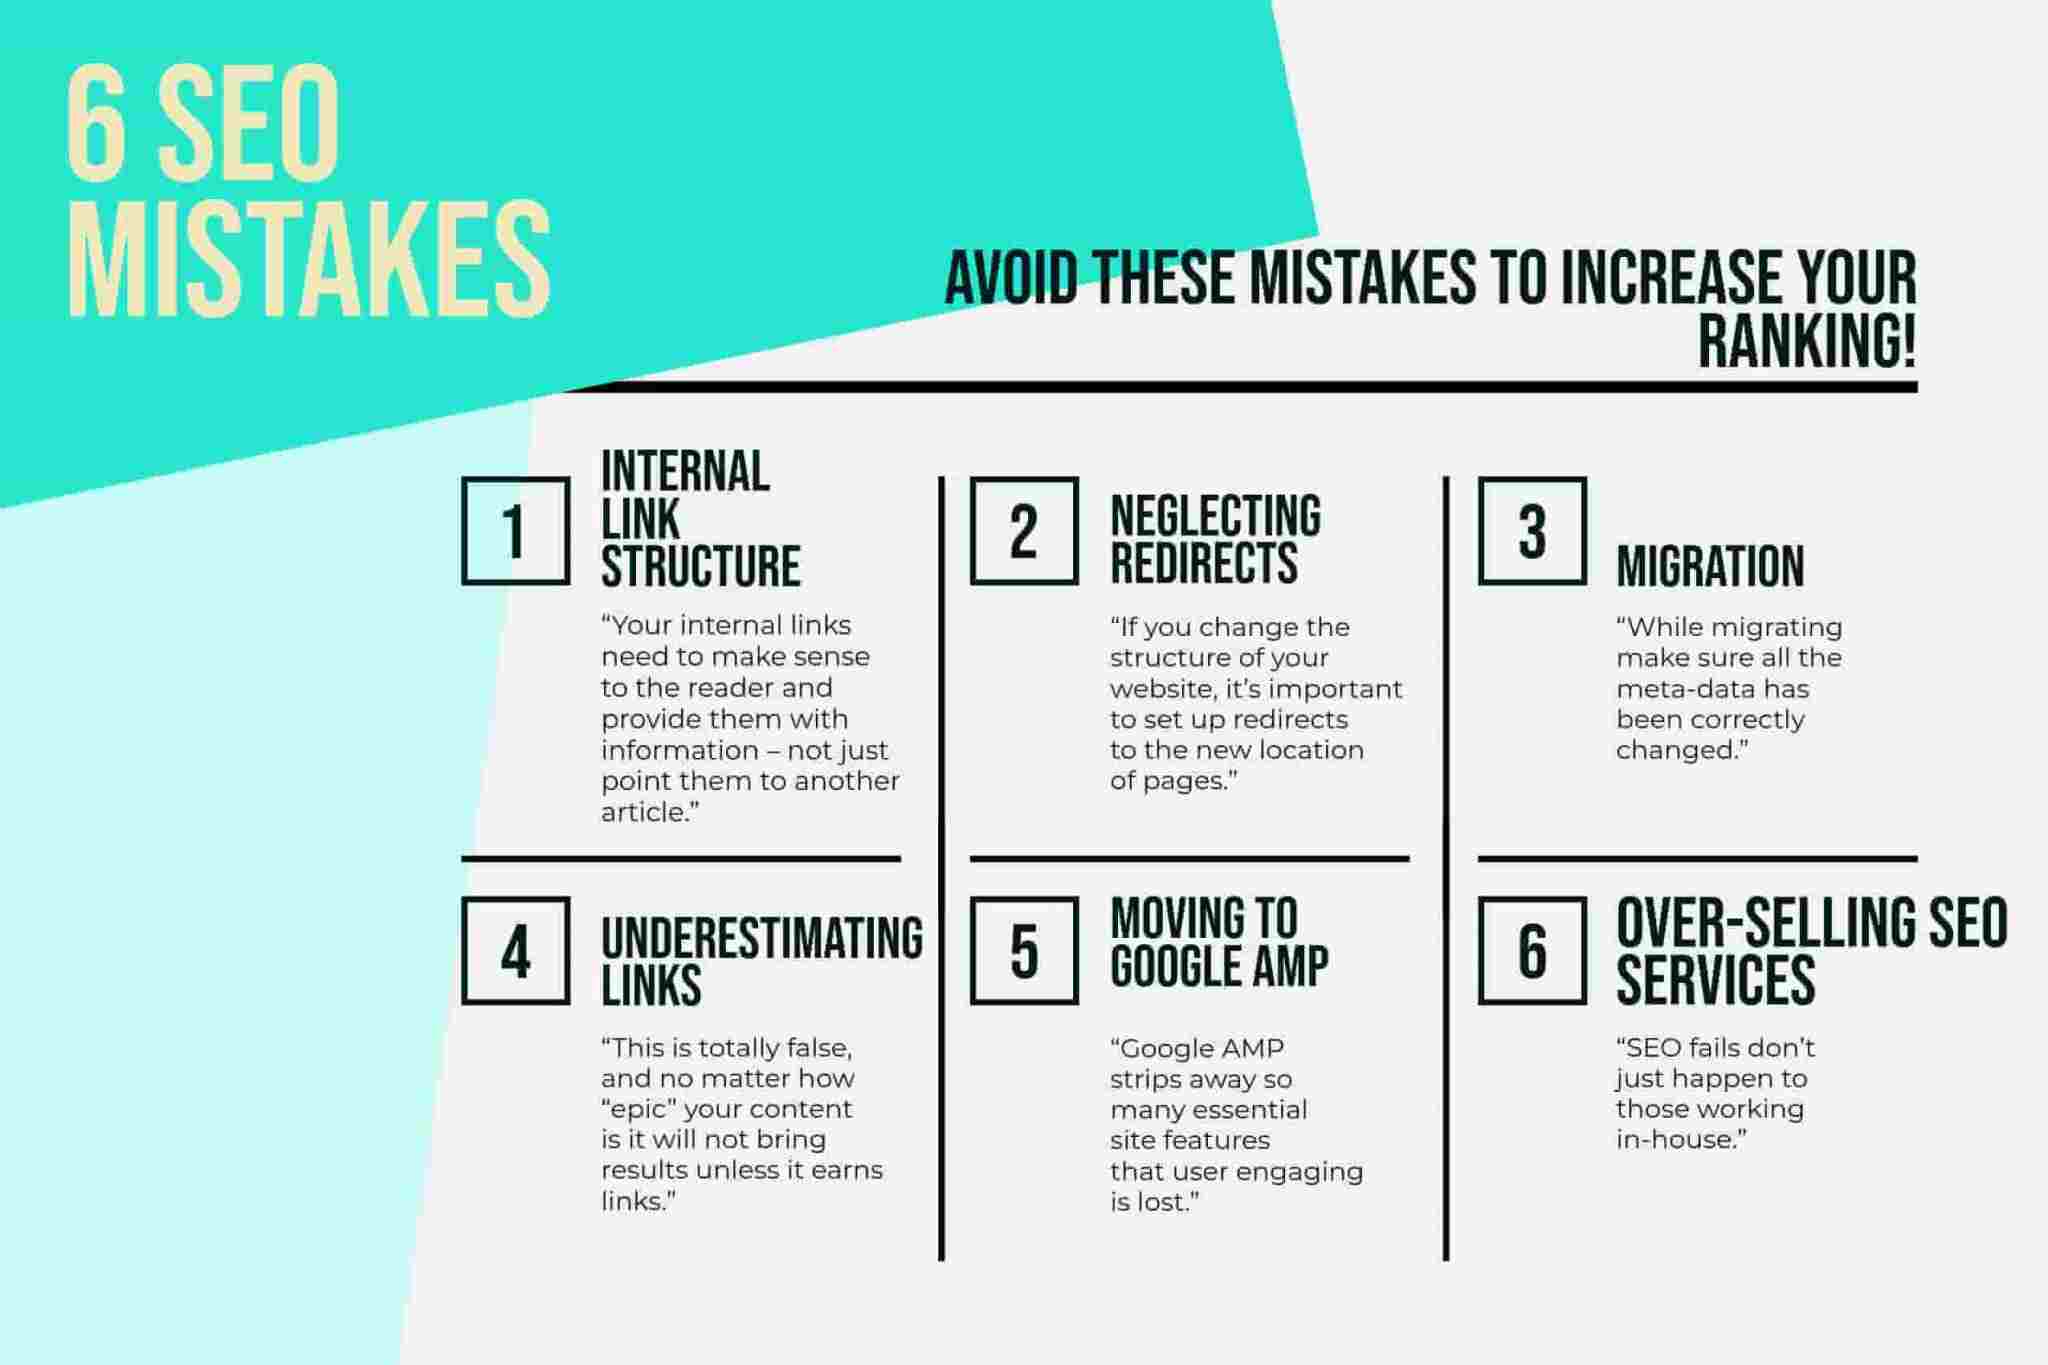 Best SEO companies avoid these mistakes